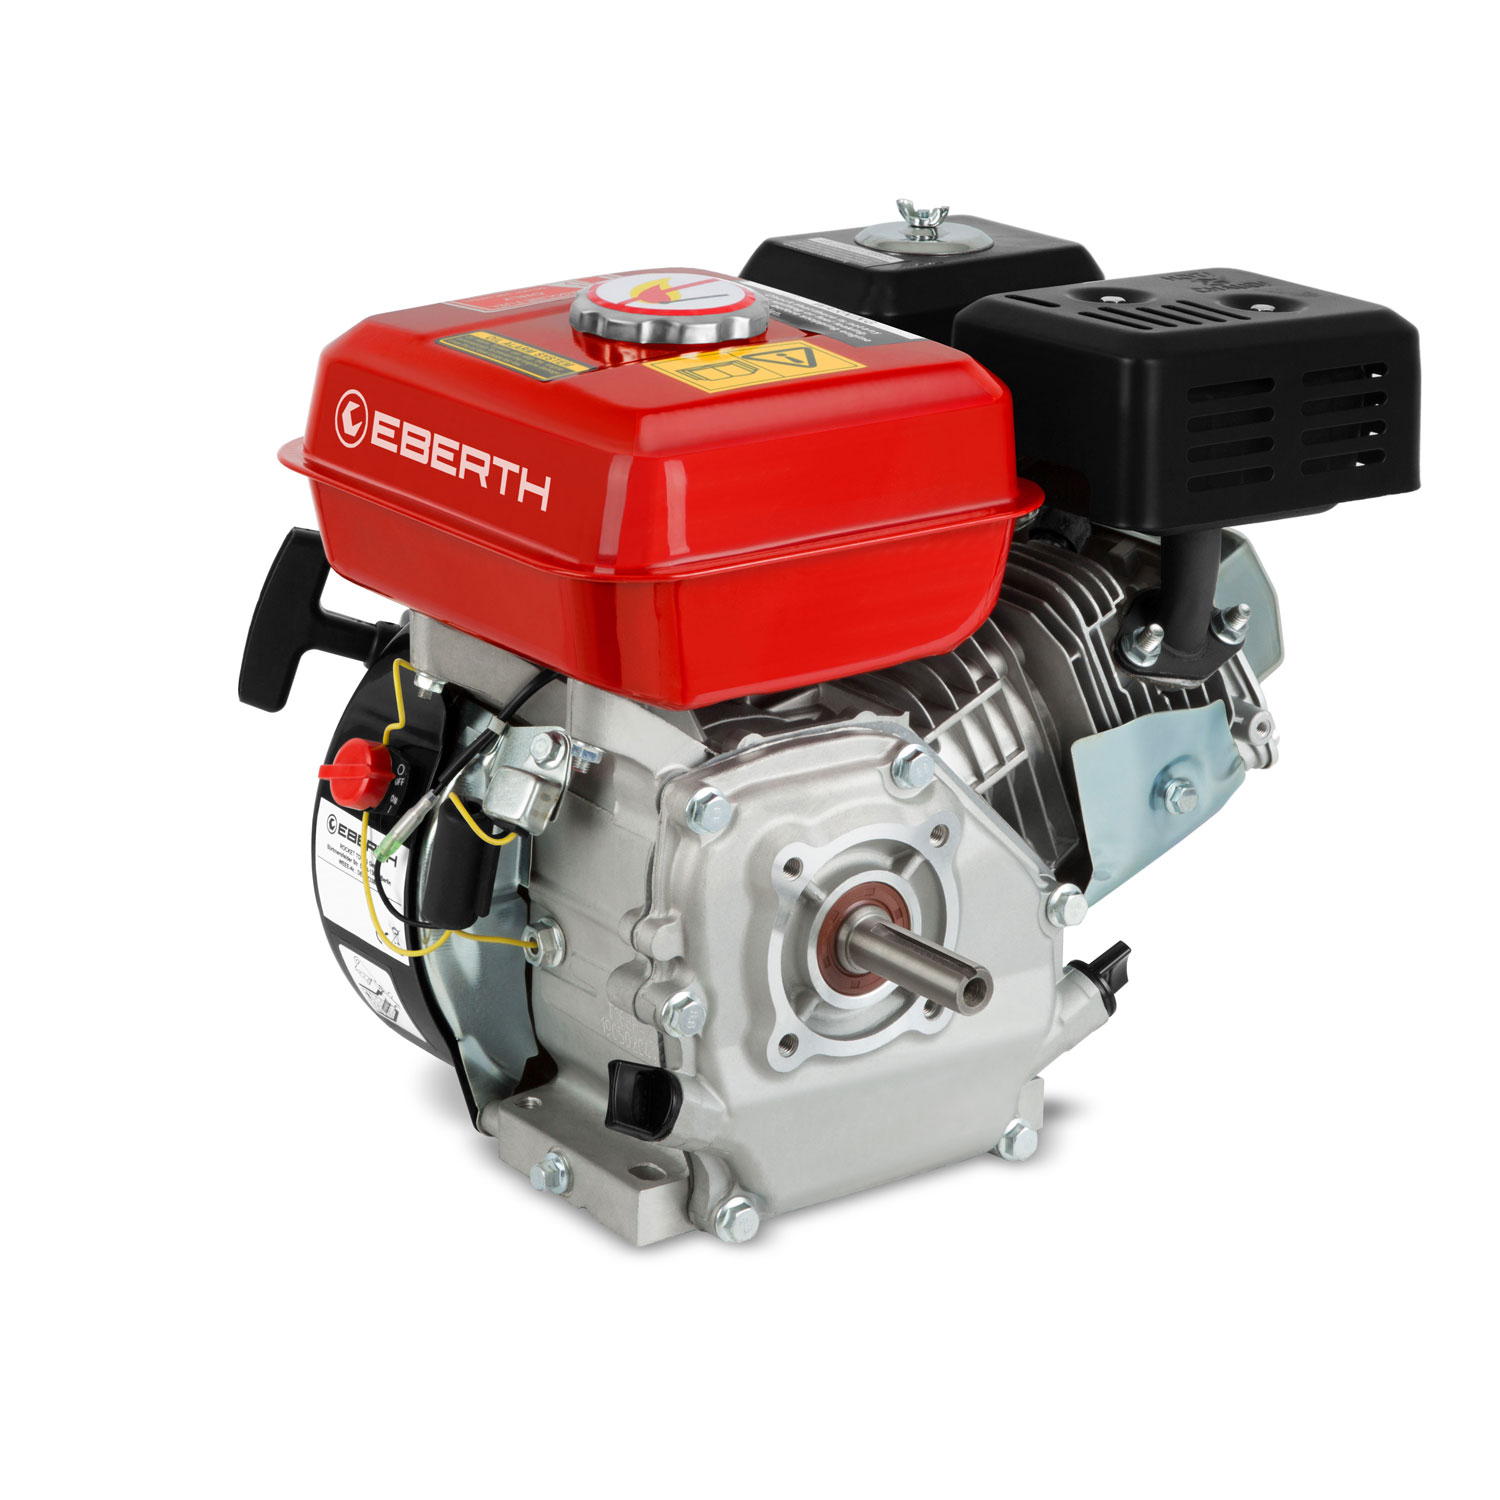 EBERTH 6,5 PS 4,8 kW Benzinmotor, 4-Takt, 1 Zylinder, 20 mm Ø